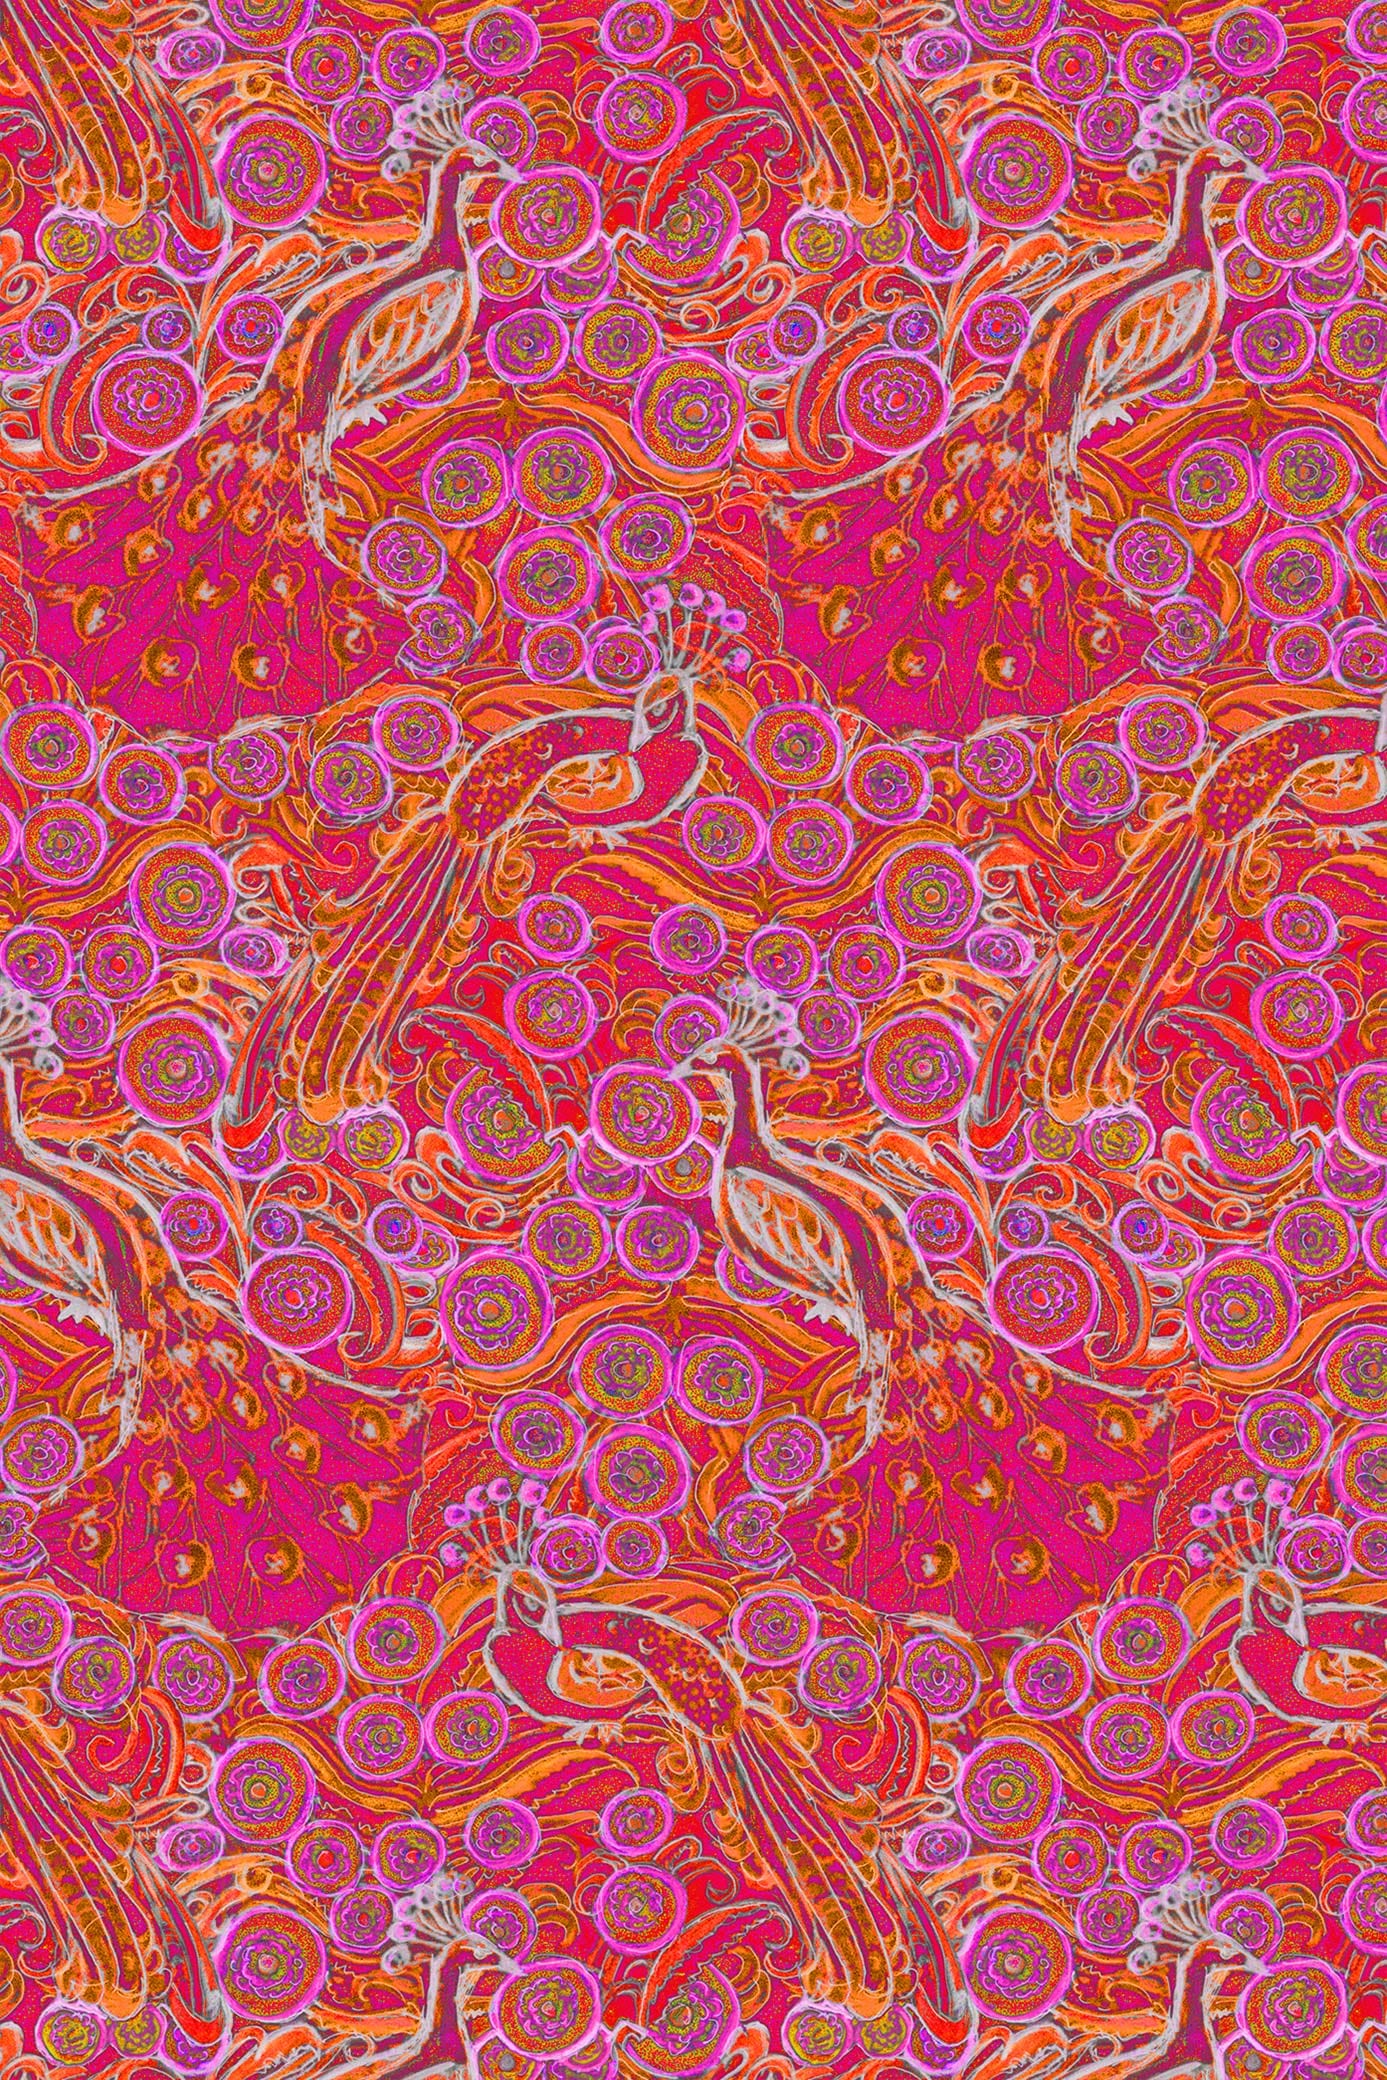 W.E.T. by Ines Schneider Pants Jazzpants Pinou / Pavone mode hamburg print sommerkleid Unique Prints Summer Dress Handdesignierte Prints Print